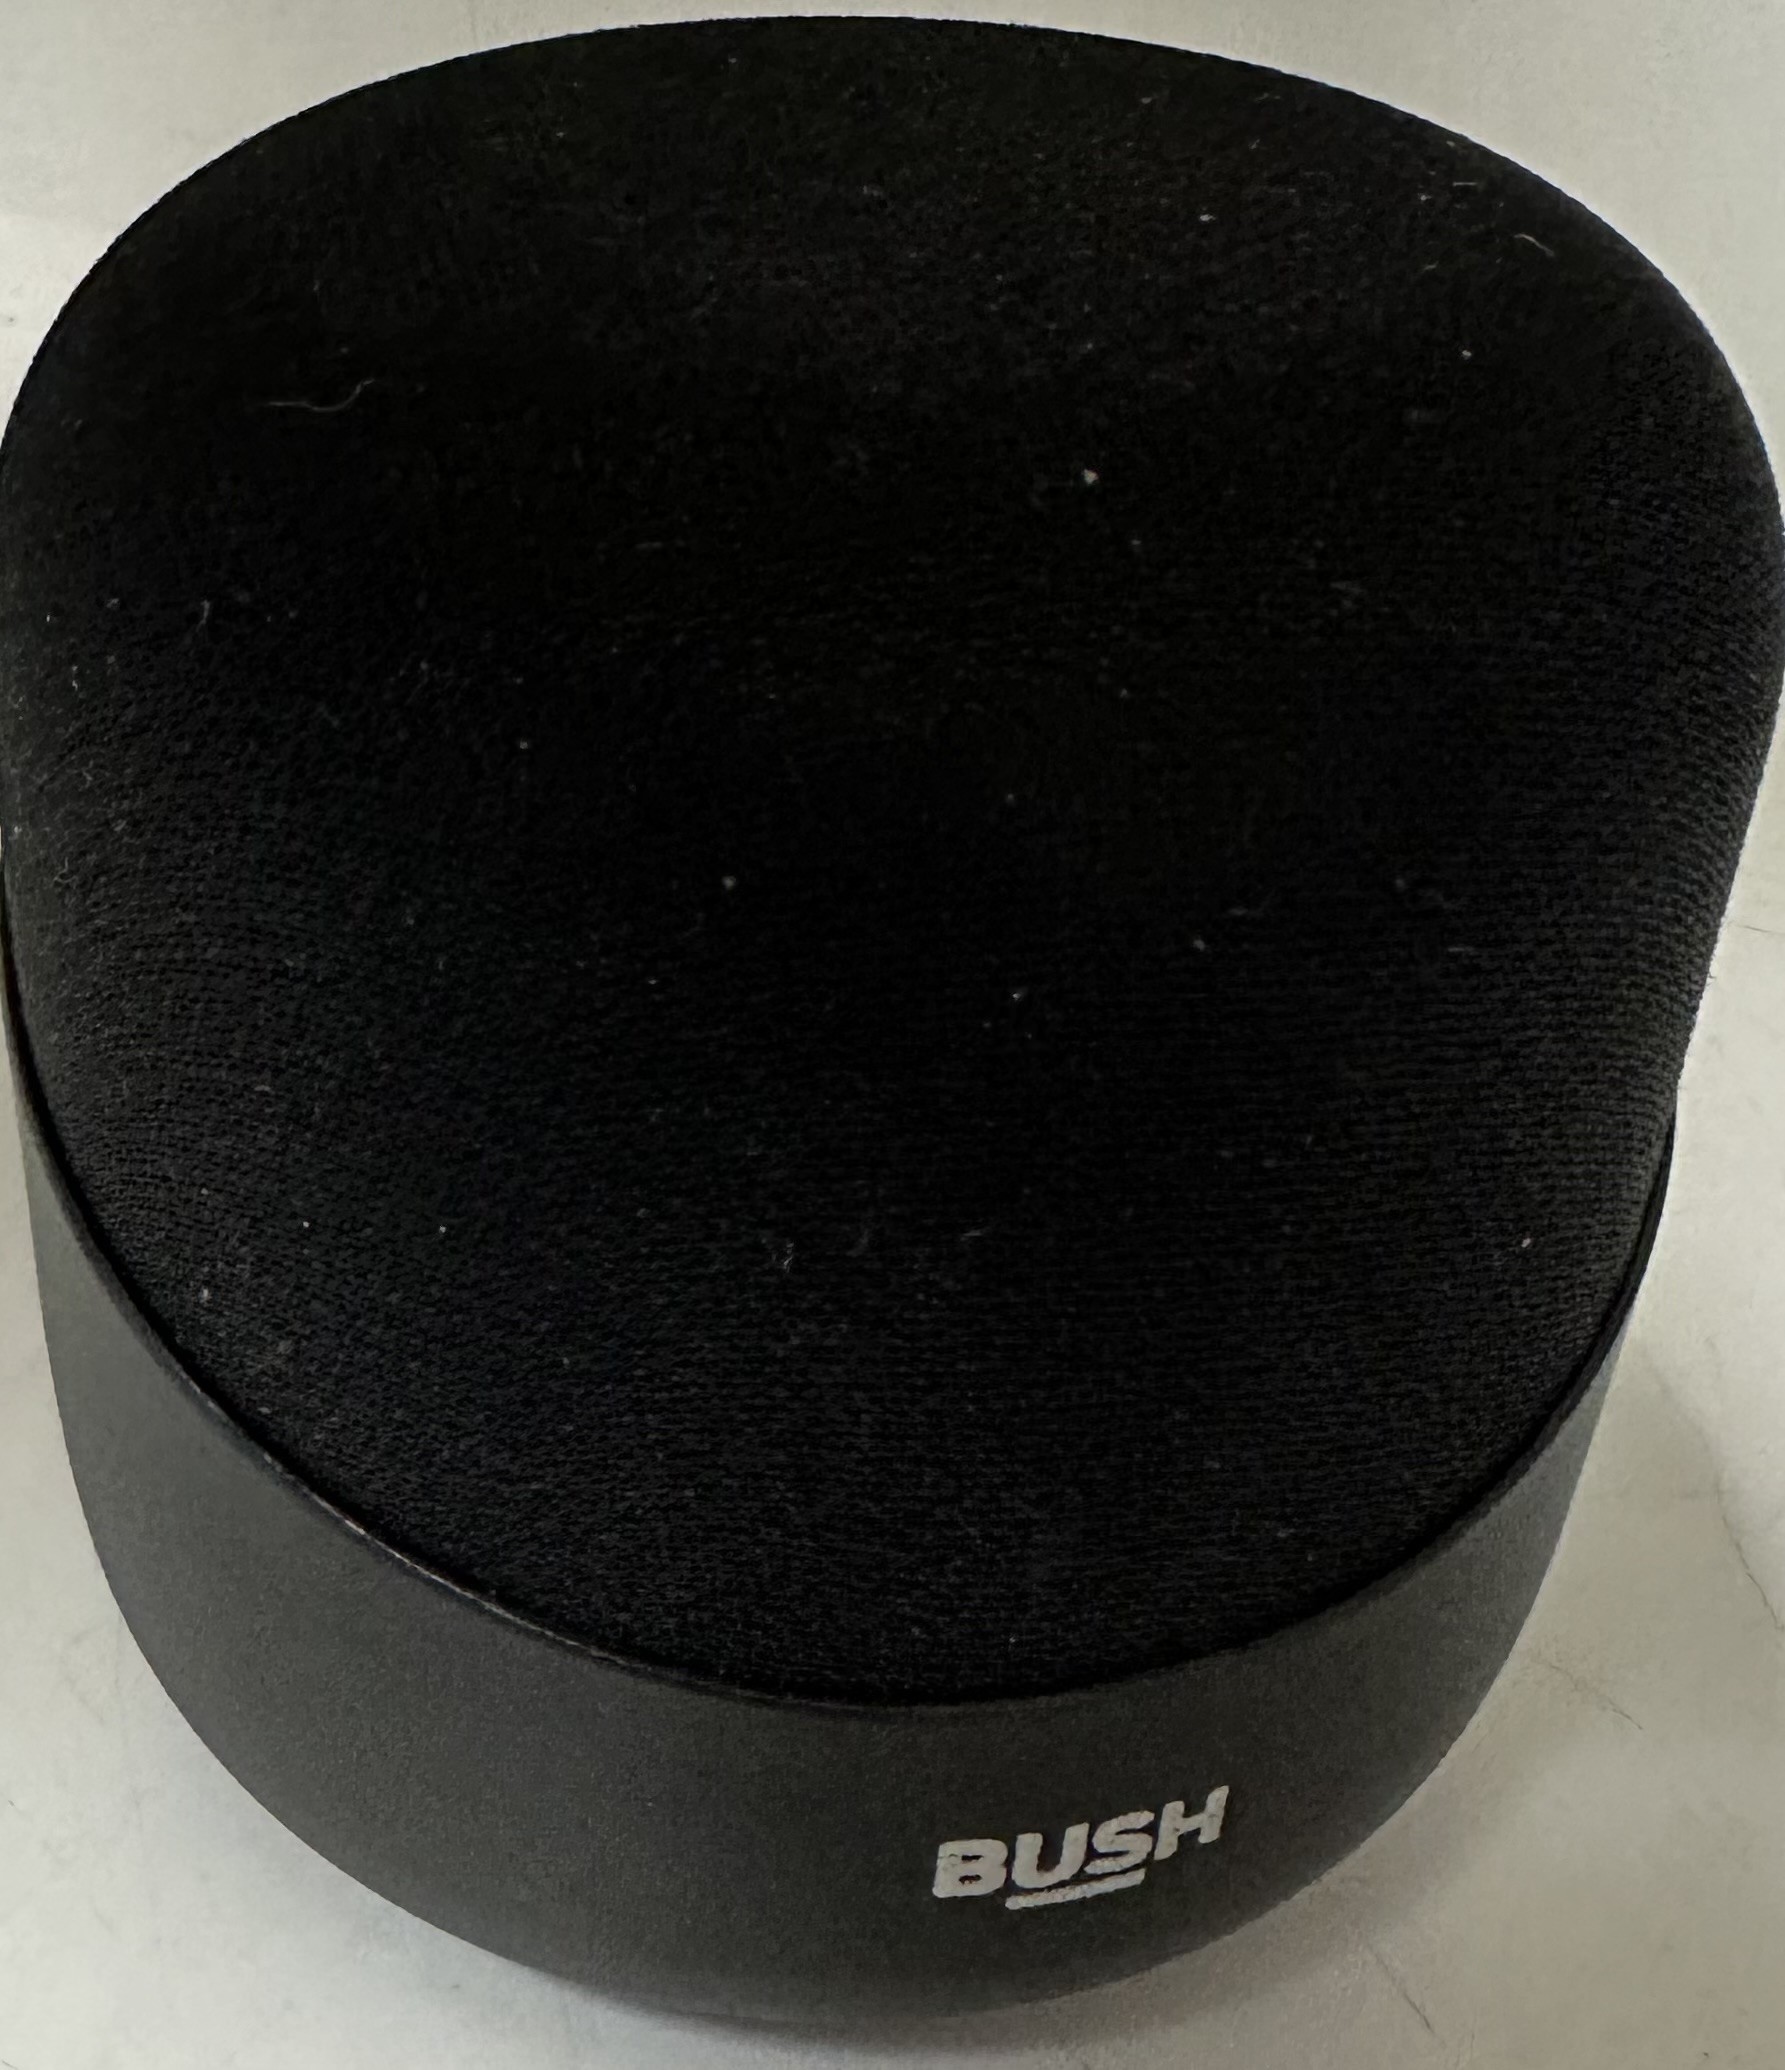 Bush Intempo Speaker Bluetooth